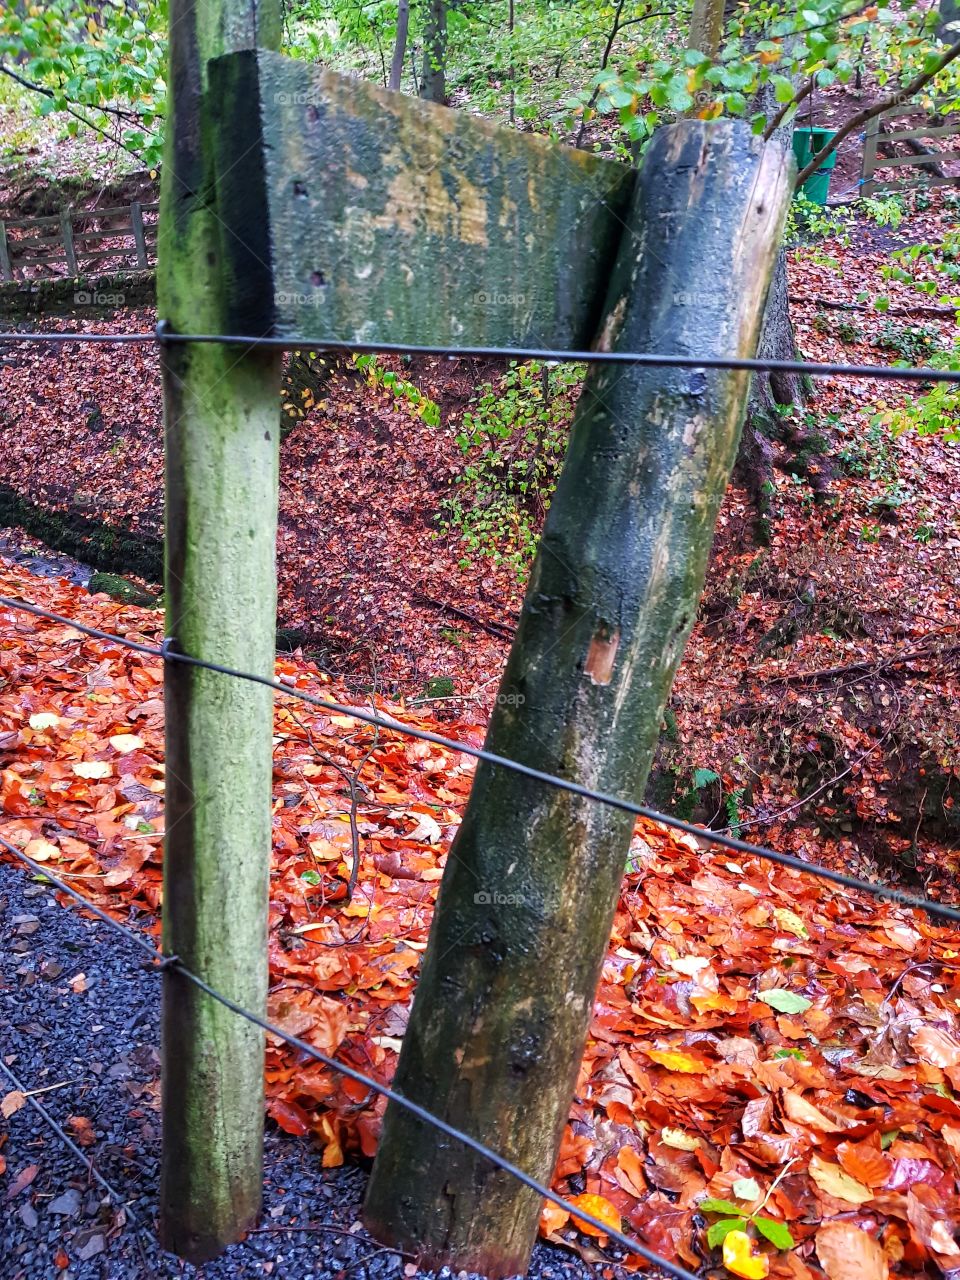 fence post